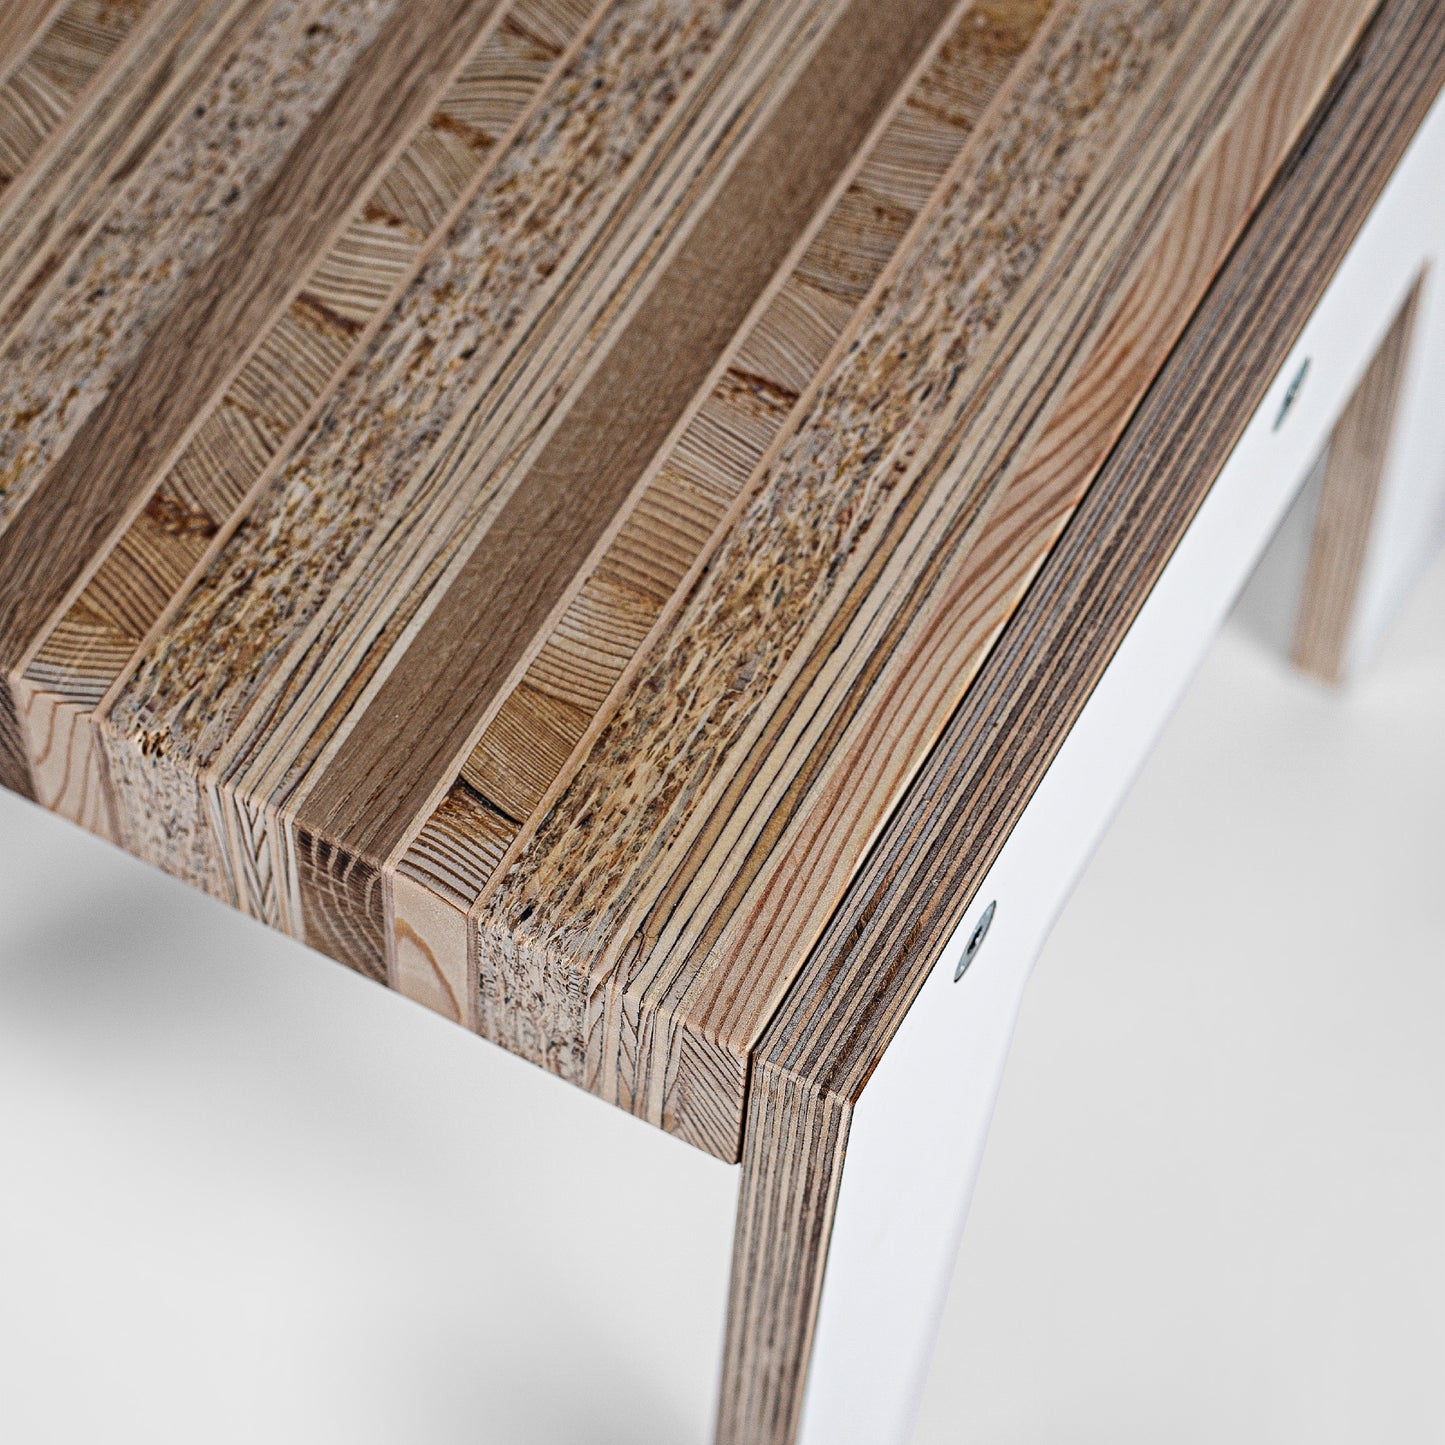 The Hauler – Handmade upcycled wooden stool